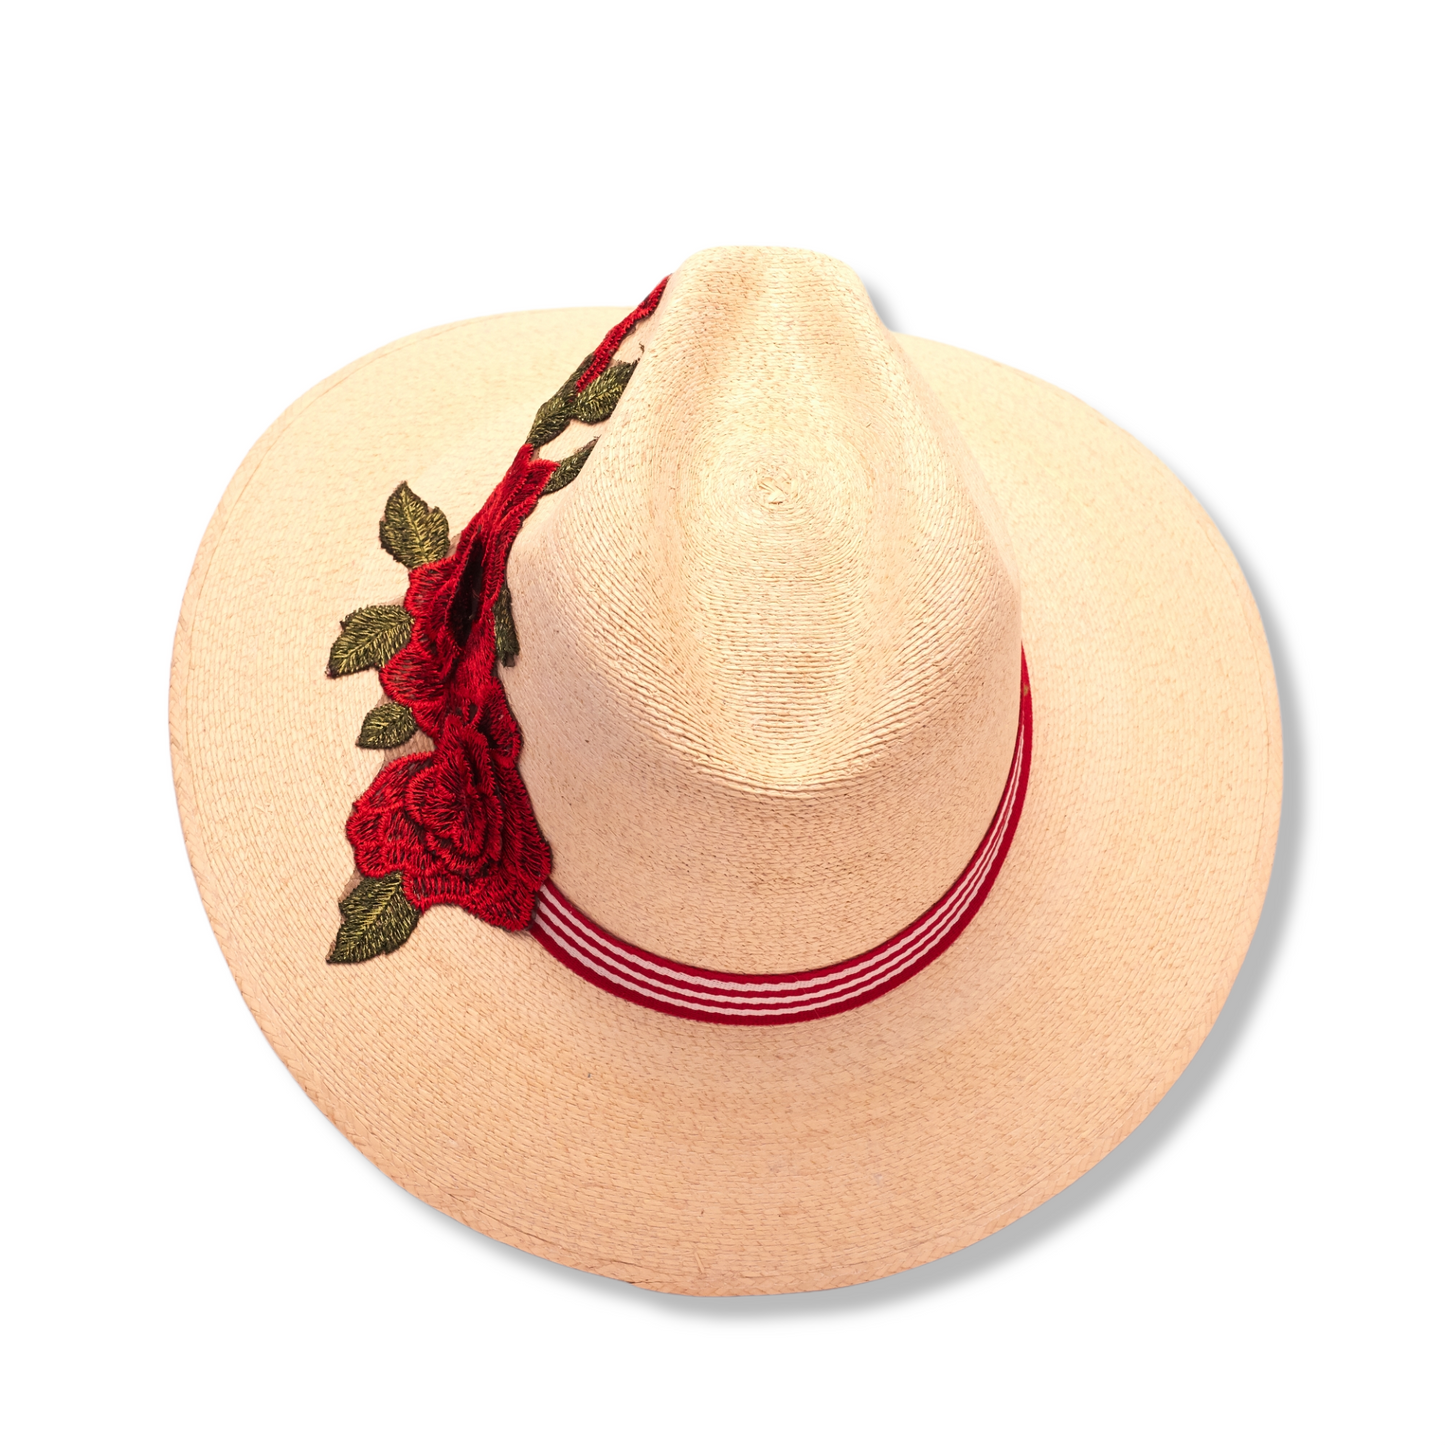 Red Rose Hat